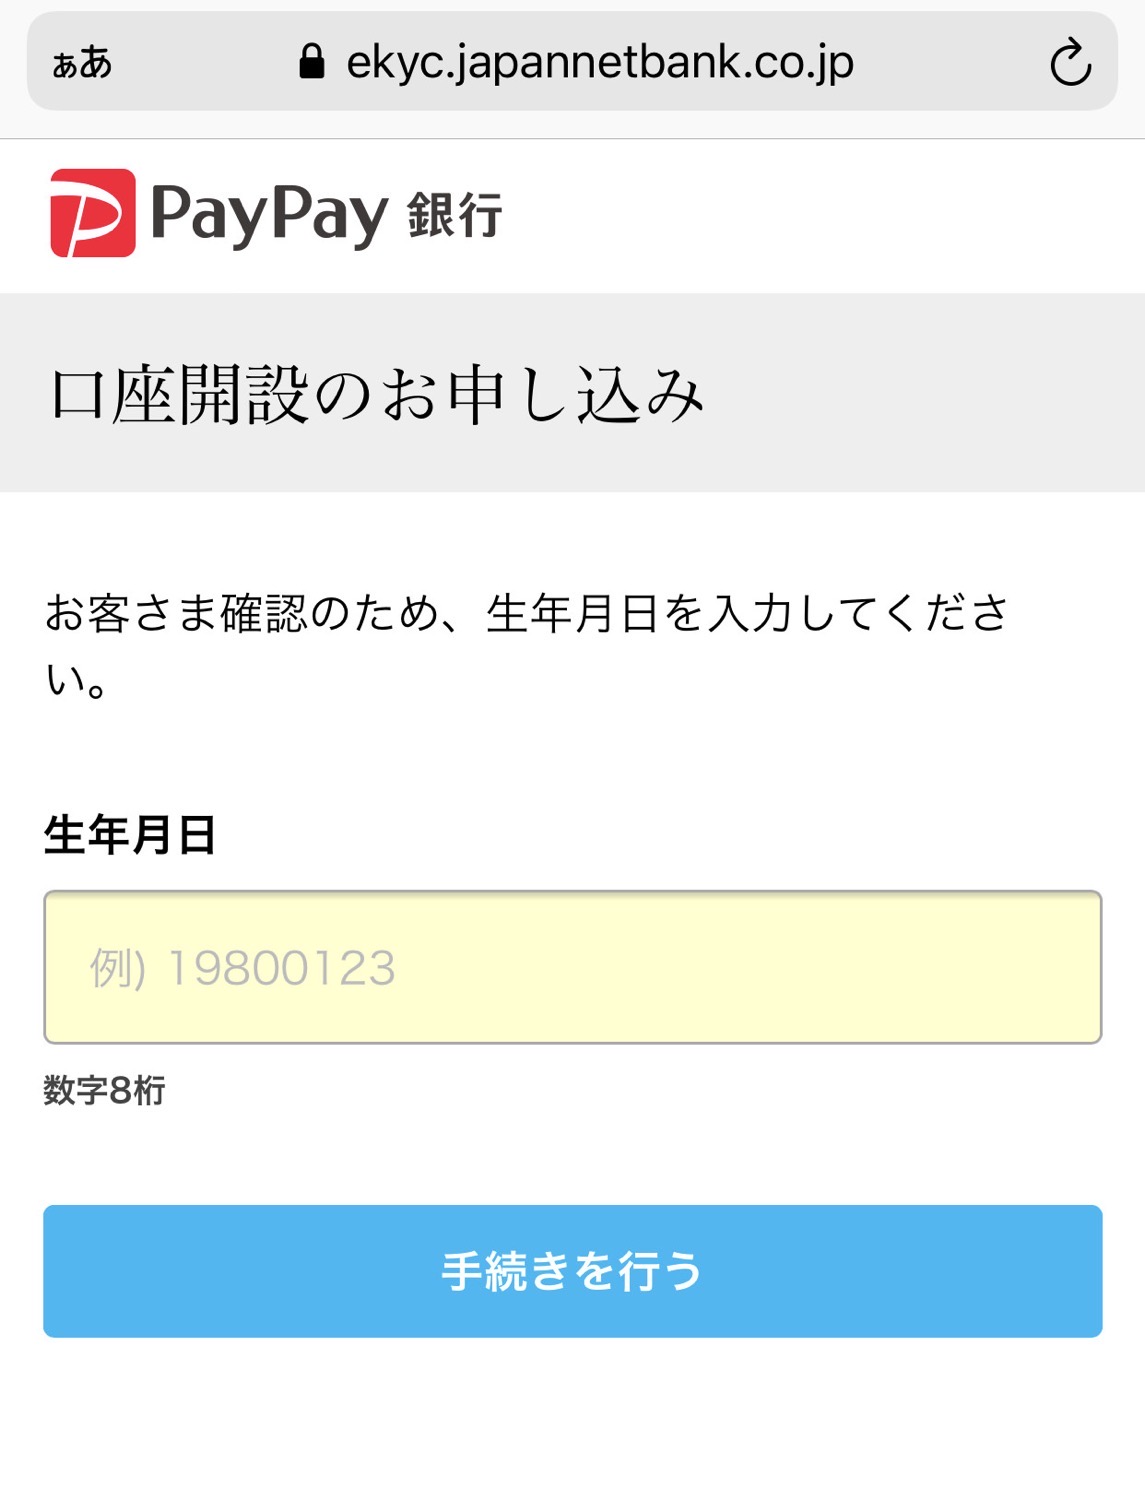 PayPay銀行 口座開設 申し込みの流れ 001 202103